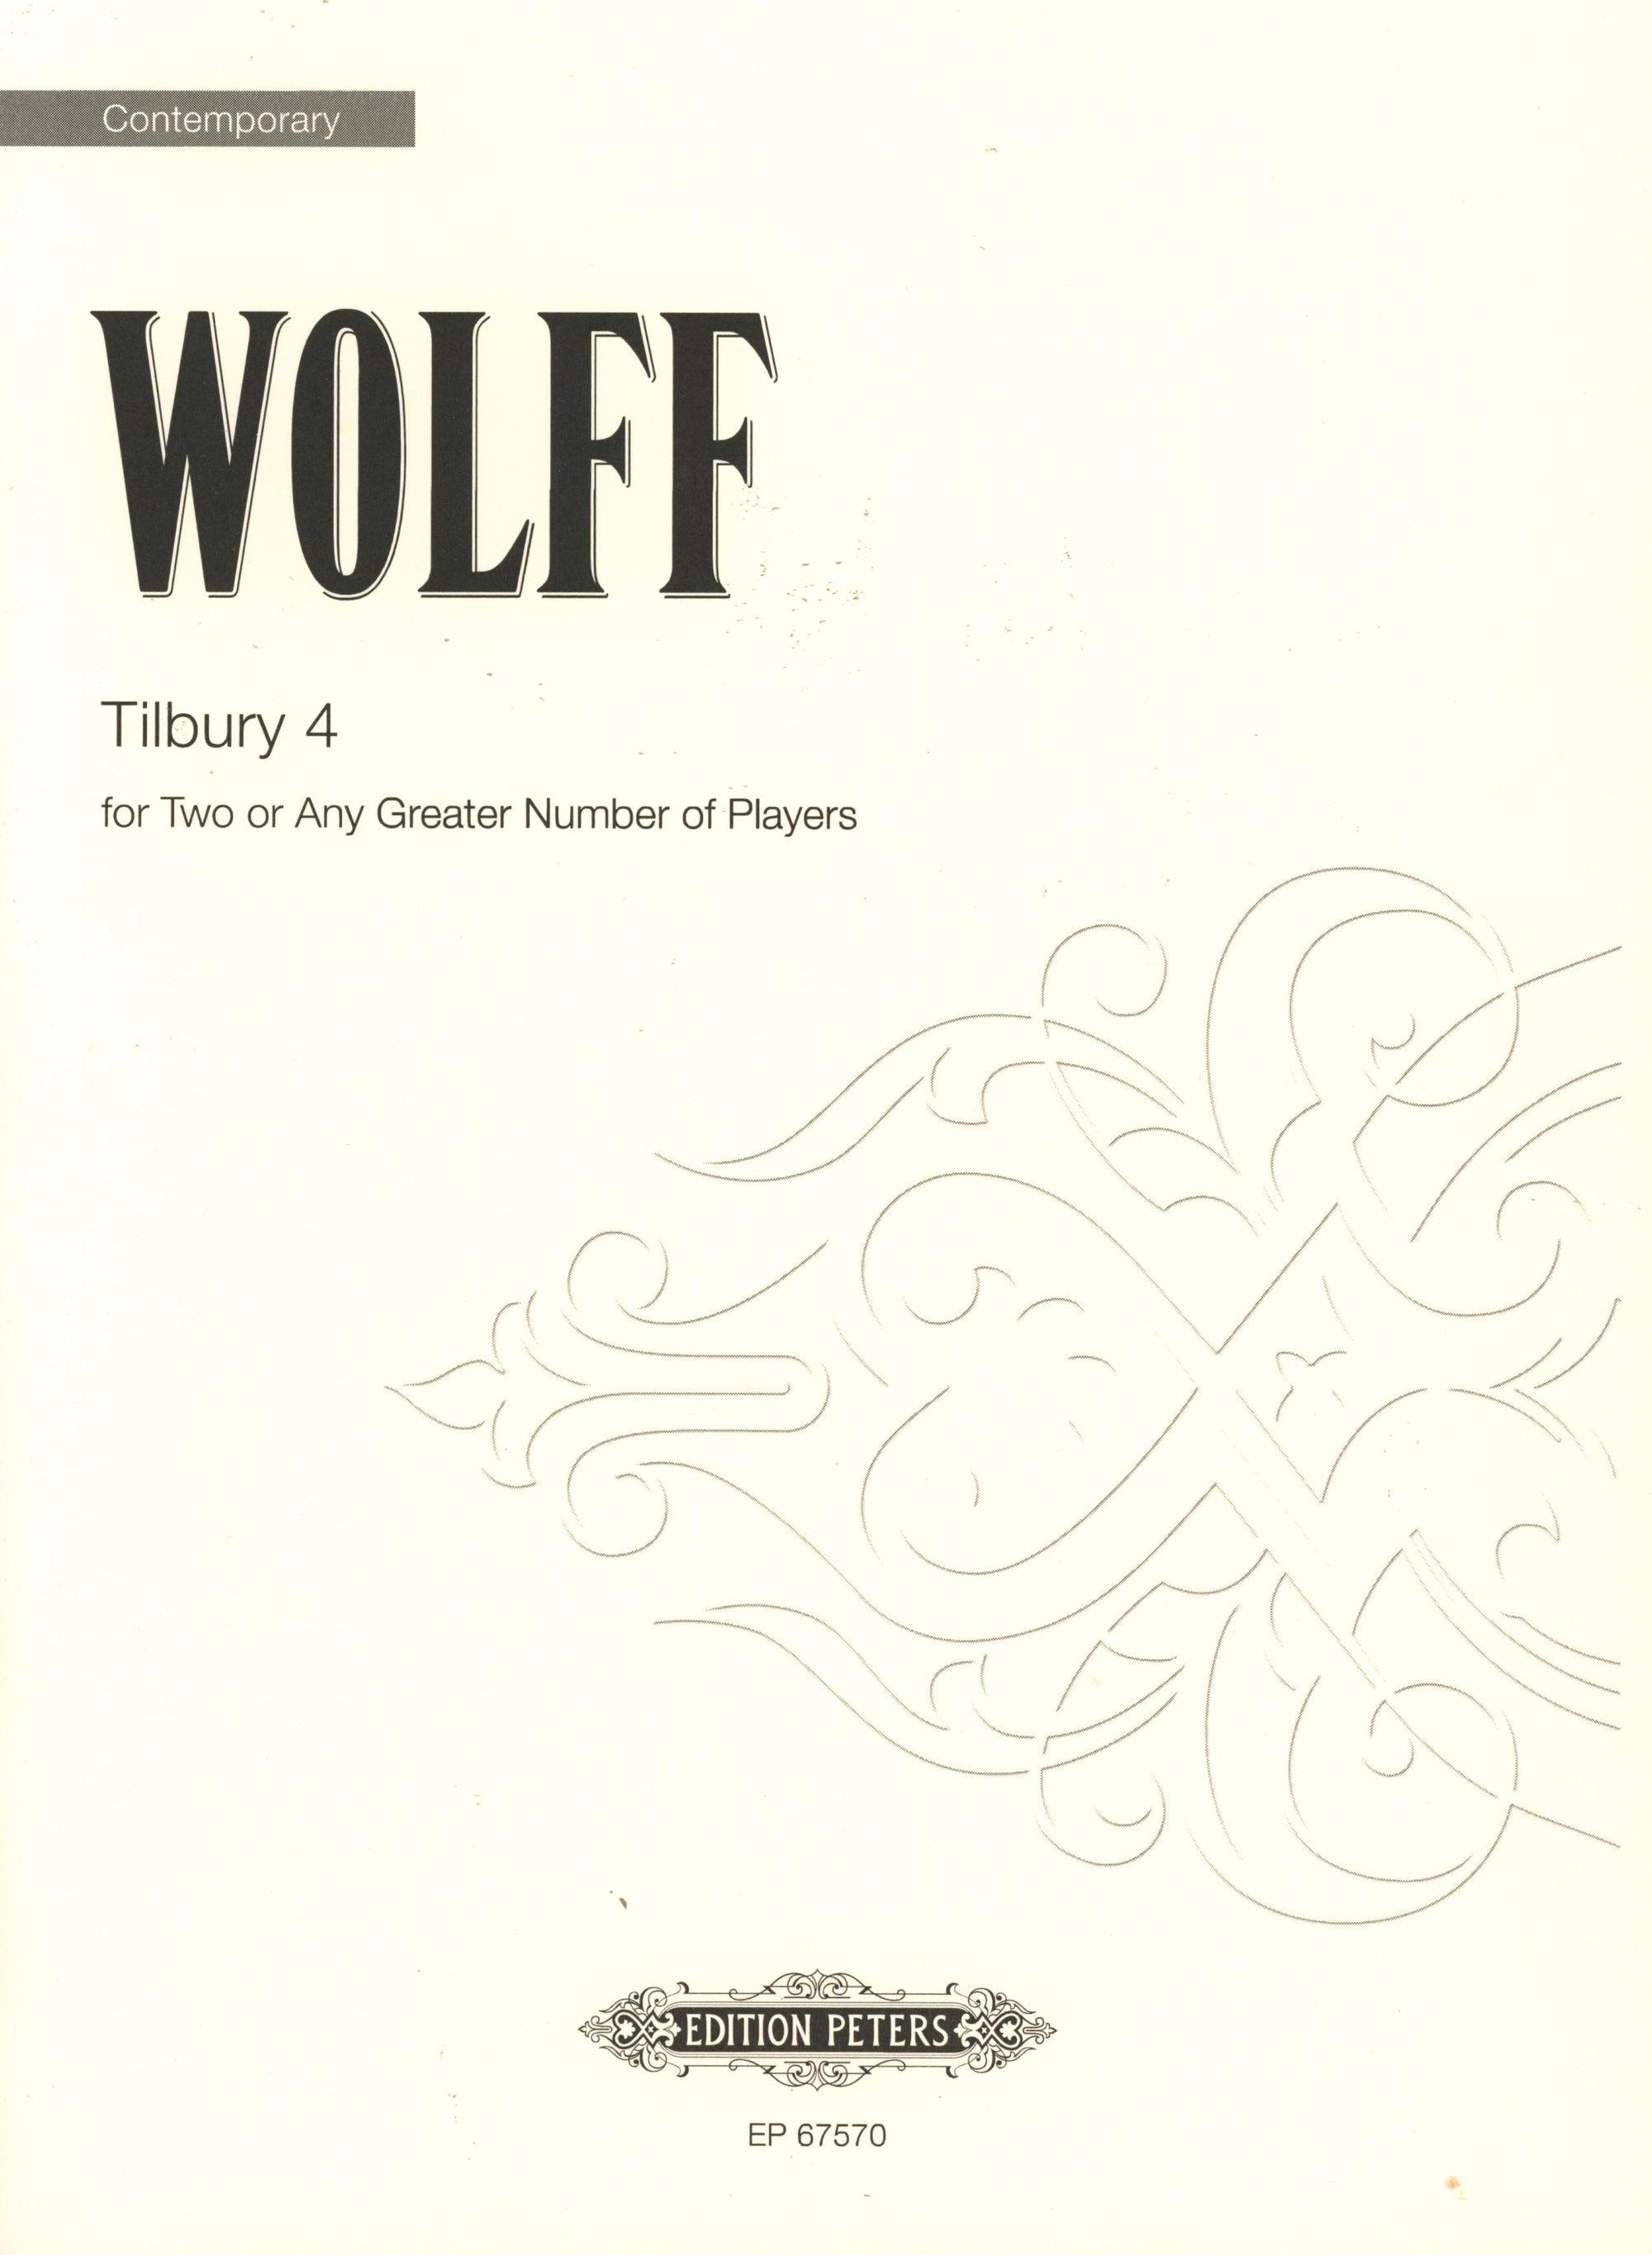 Wolff: Tilbury 4